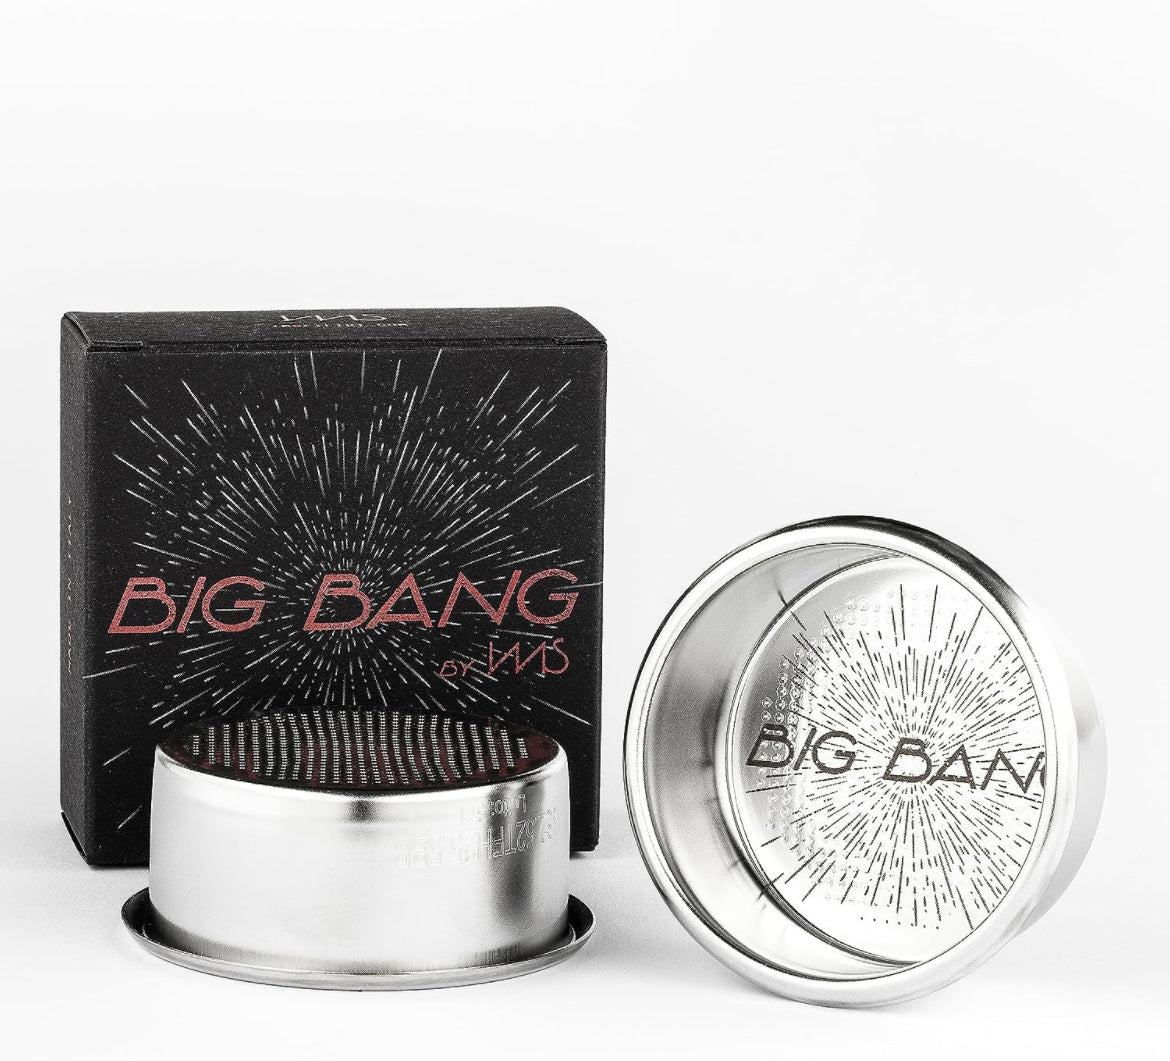 IMS Big Bang Präzisions-Filterkorb für 58 mm Siebträger 21.5 mm hoch - Coffee Coaching Club